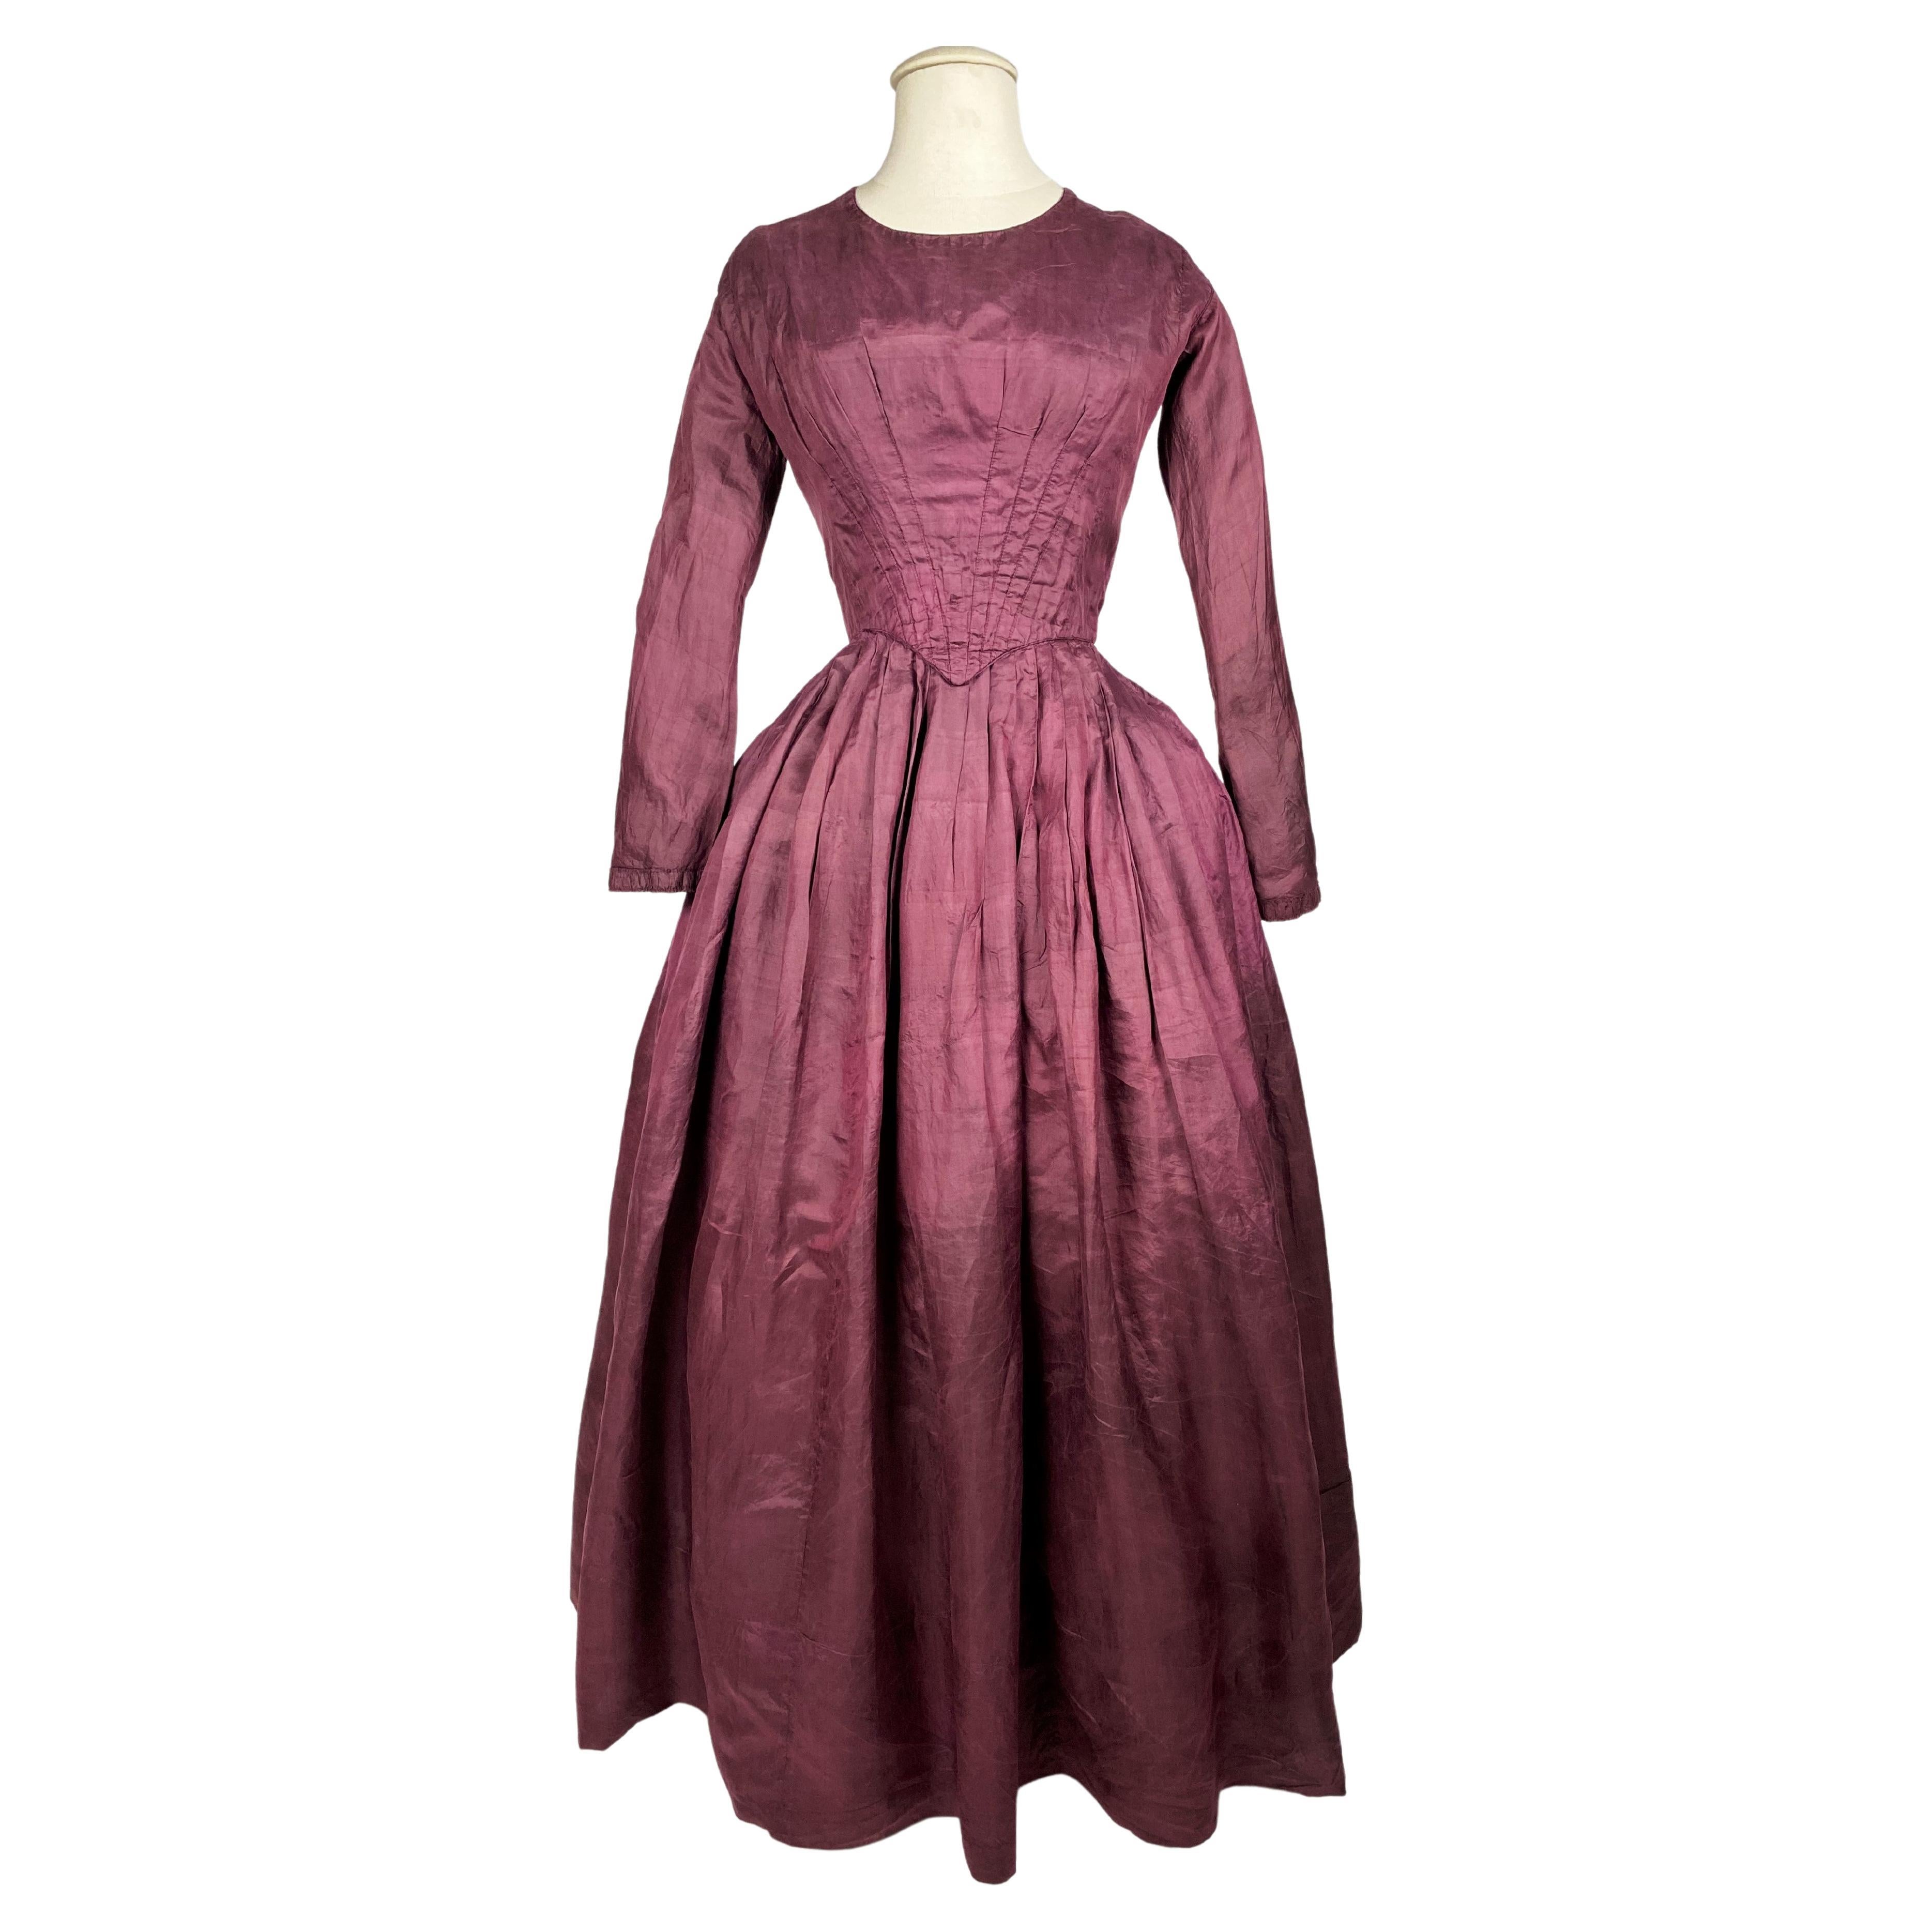 A Dyed Taffeta-Aubergine French Day Dress Circa 1845